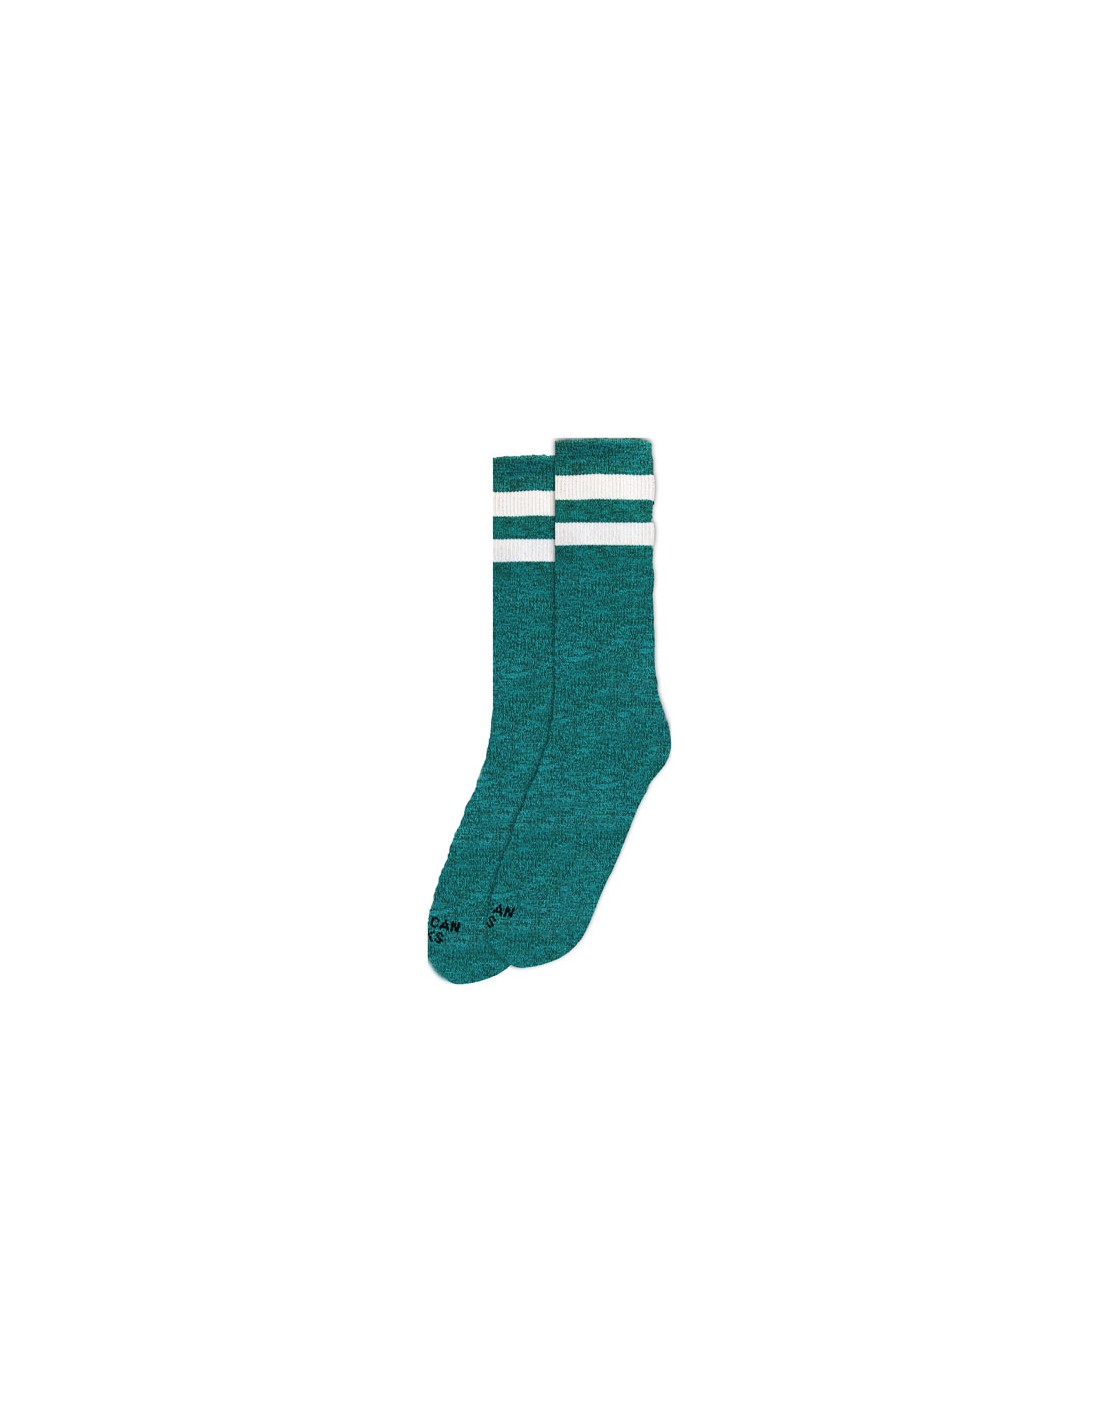 American Socks Turquoise Noise - Mid High Socks